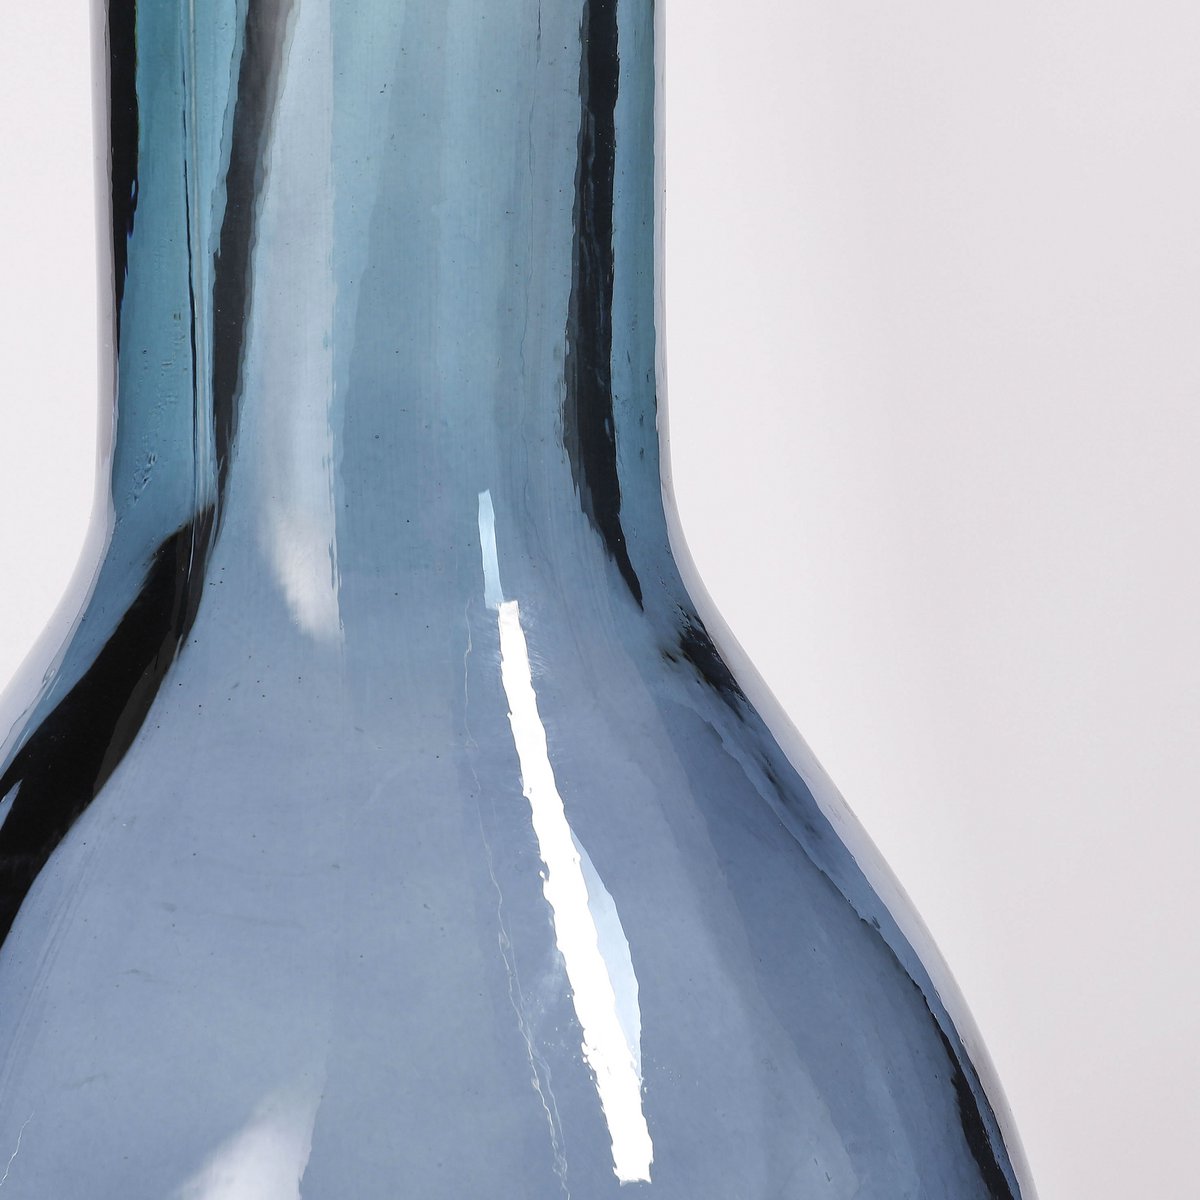 Rioja-Flaschenvase – H100 x Ø21 cm – recyceltes Glas – Hellblau